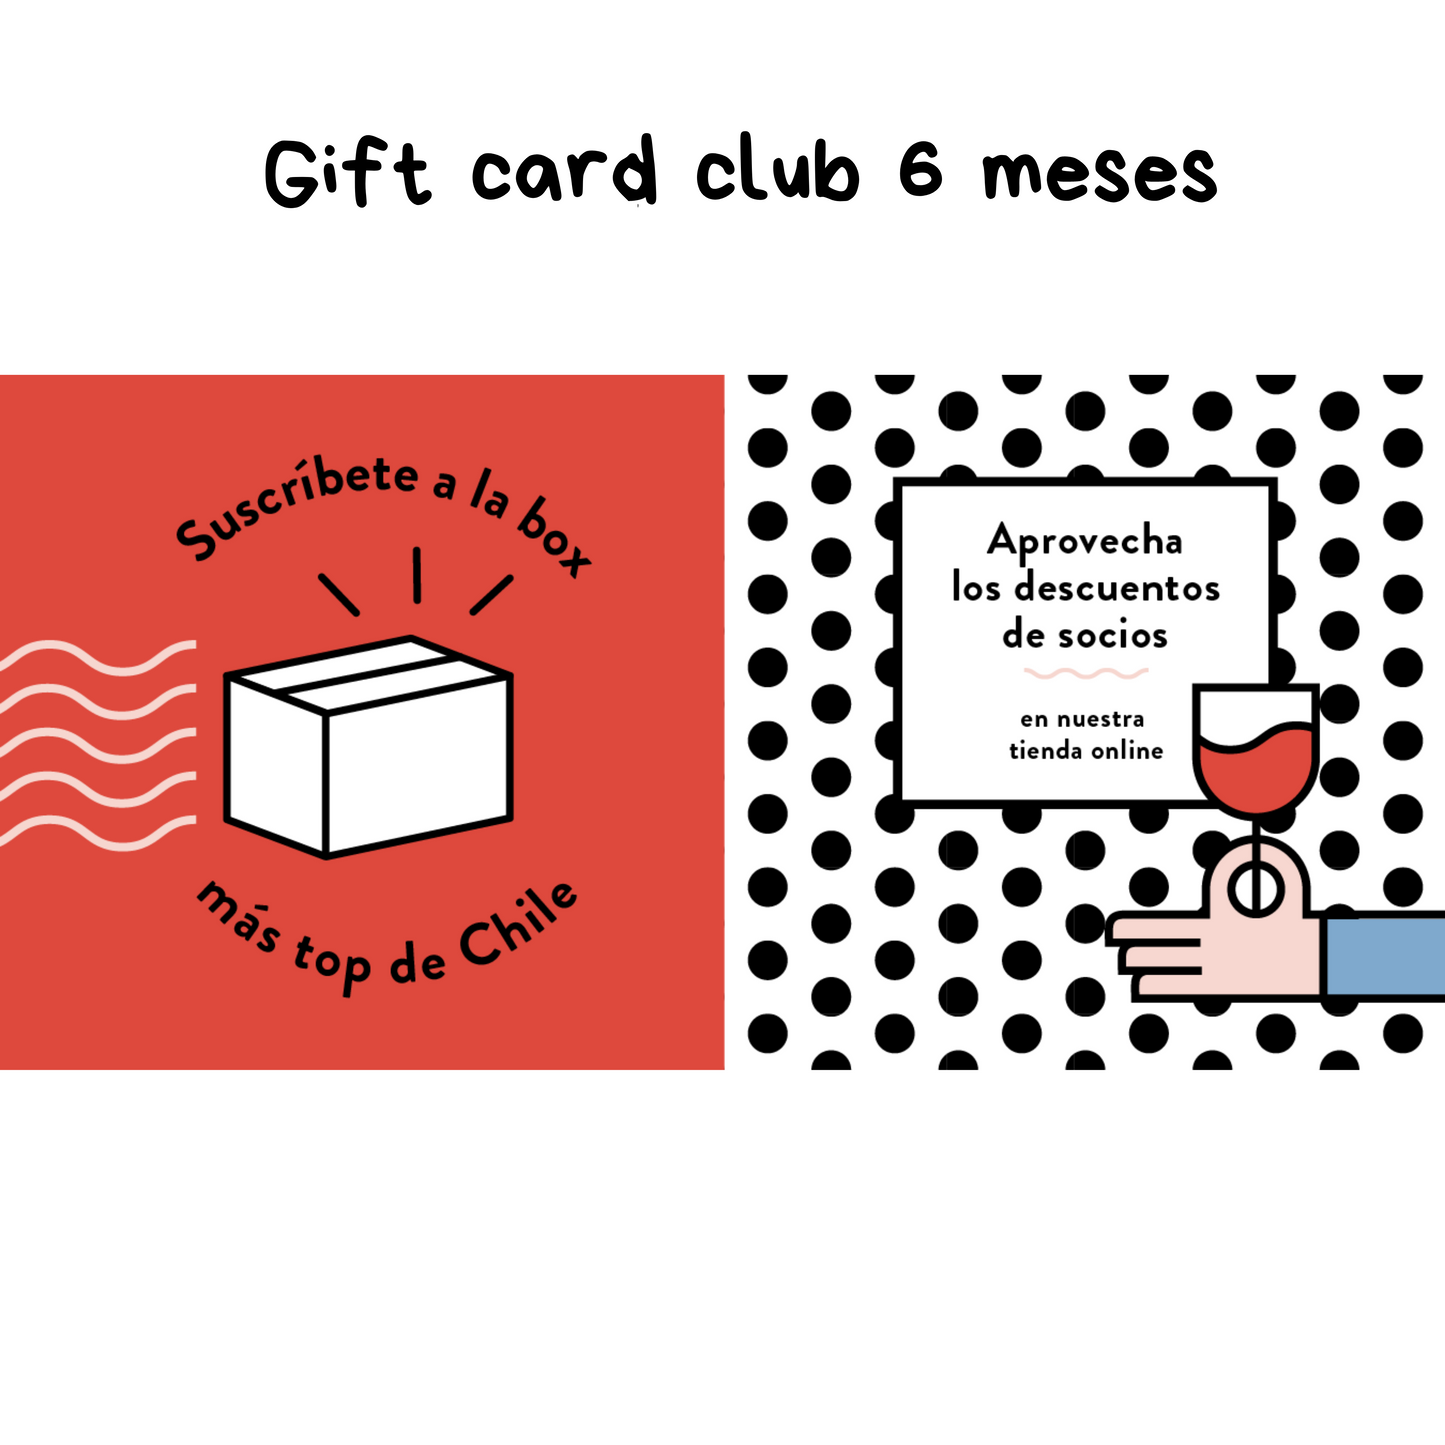 GIFT CARD 6 MESES